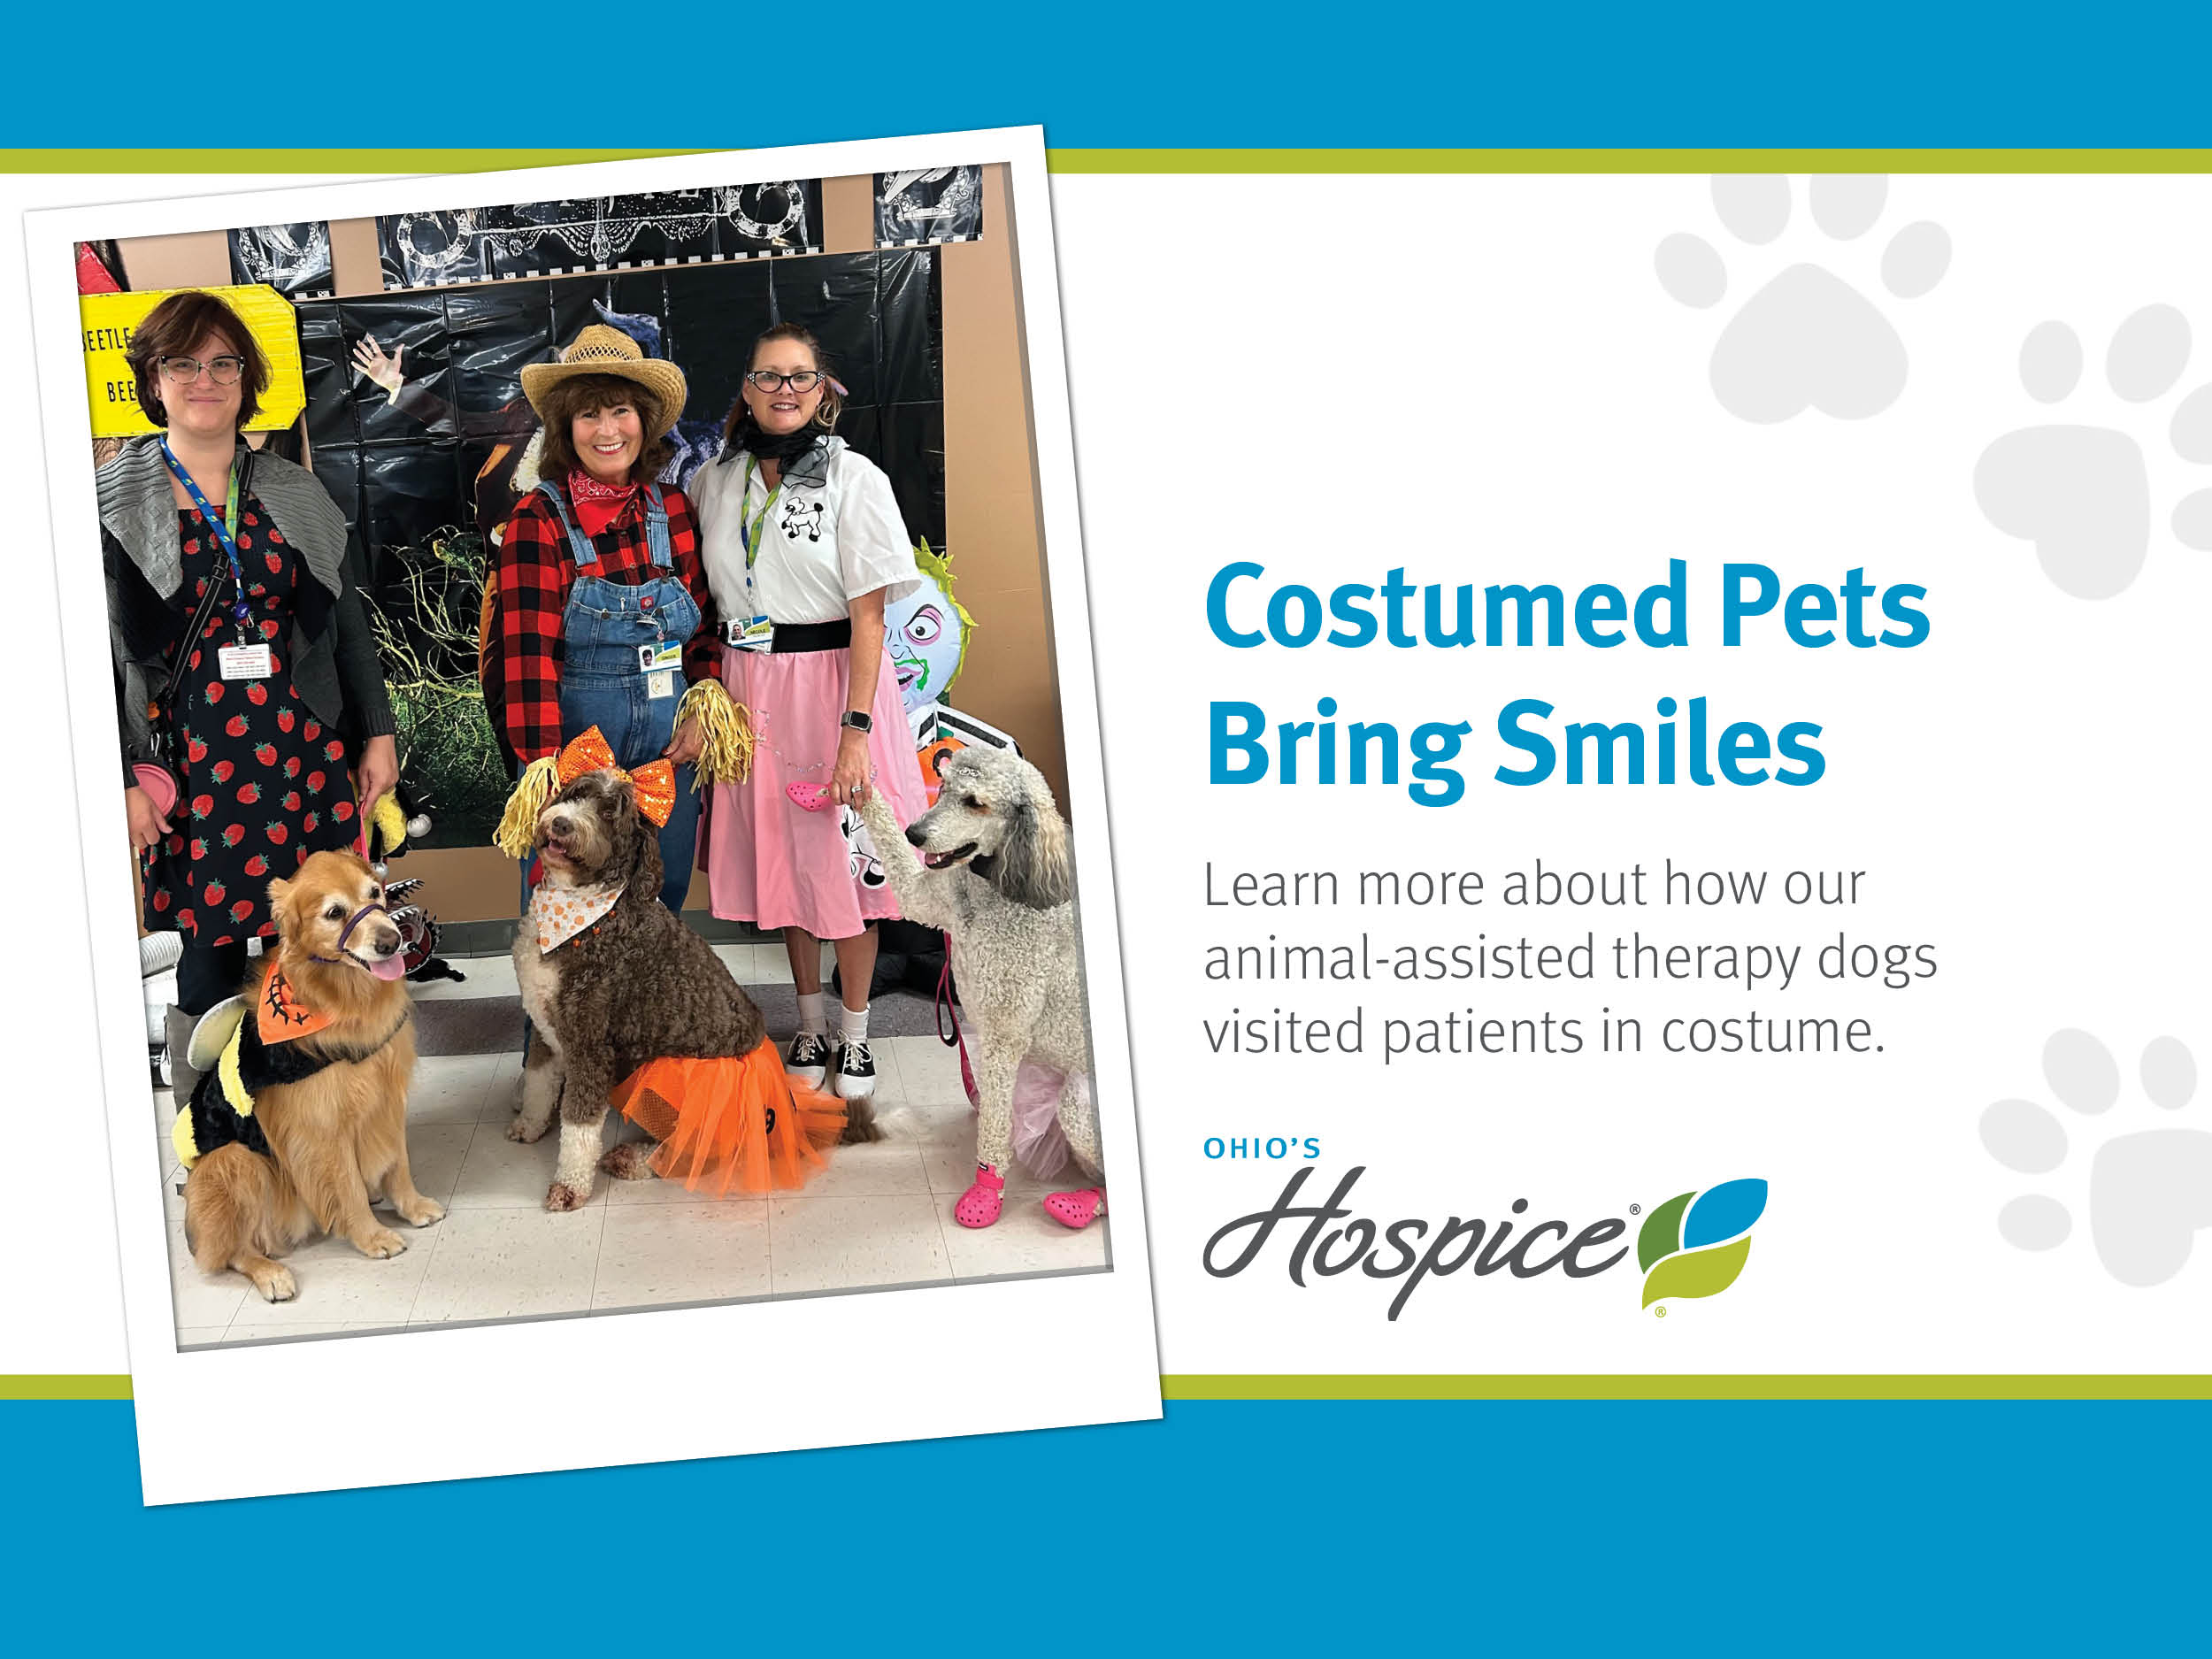 Costumed pets bring smiles. Ohio's Hospice